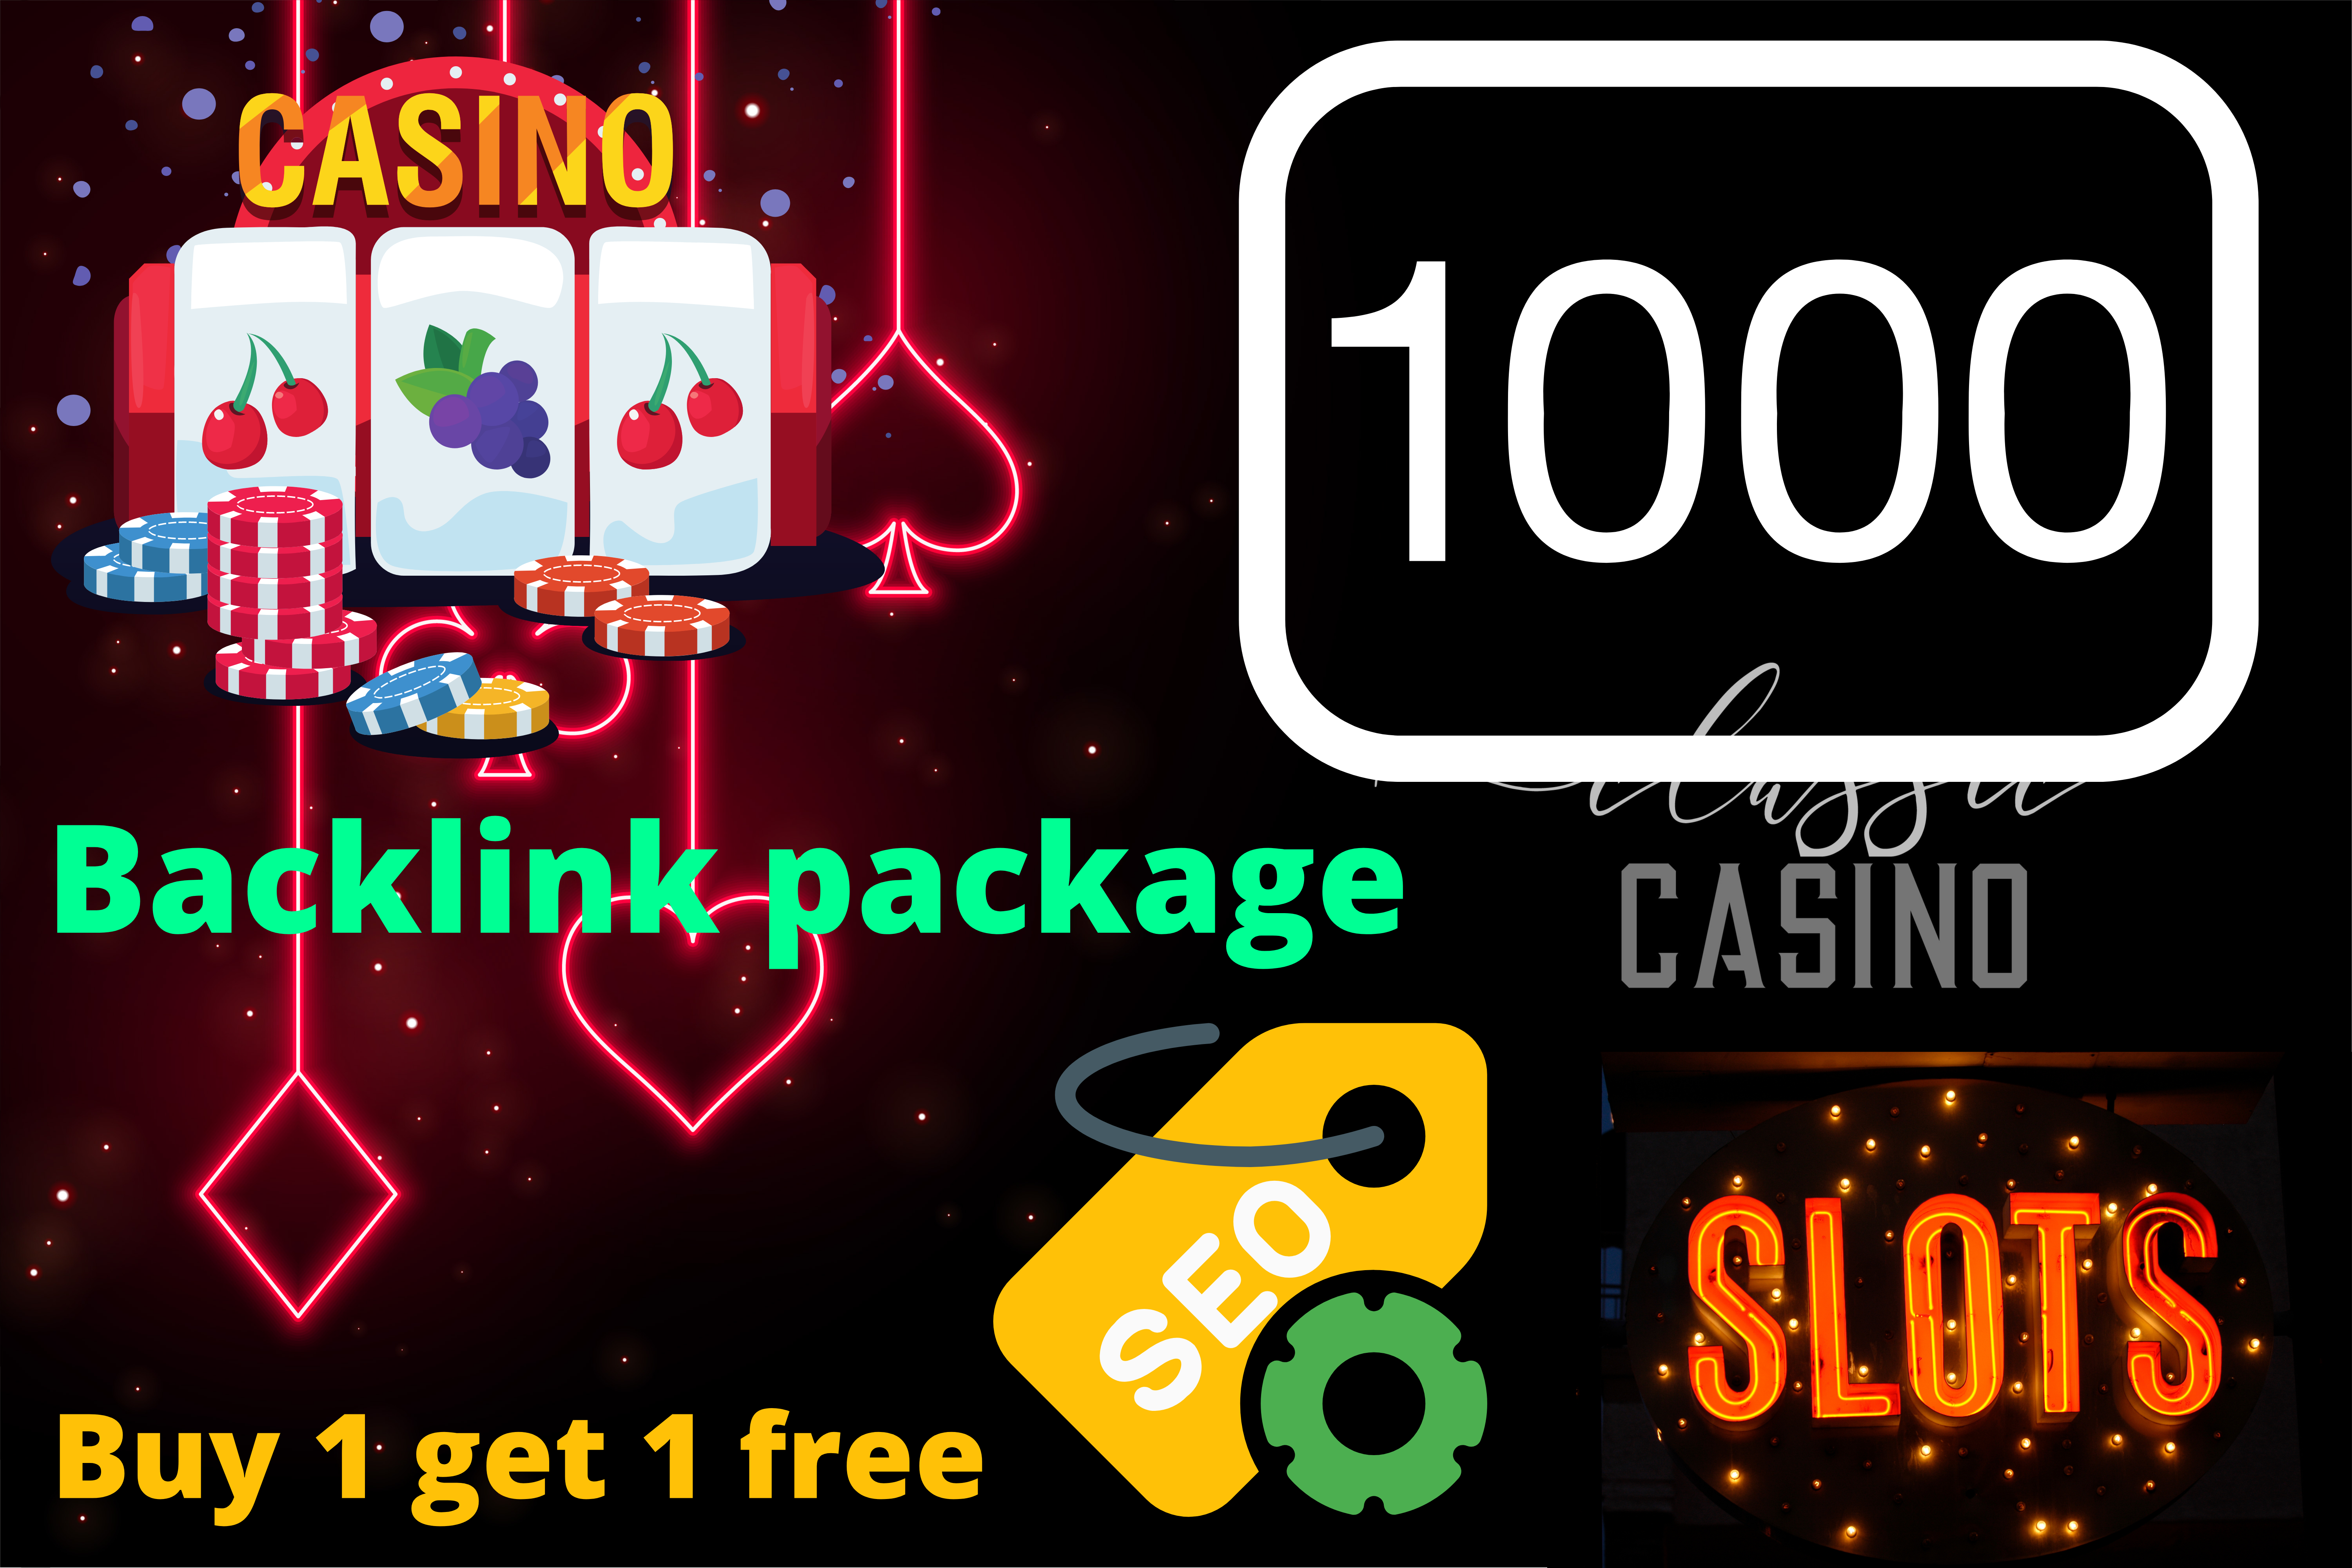 Buy 1 get 1 free package of Gambling backlinks,poker, Casino Backlinks, for Google Top ranking 